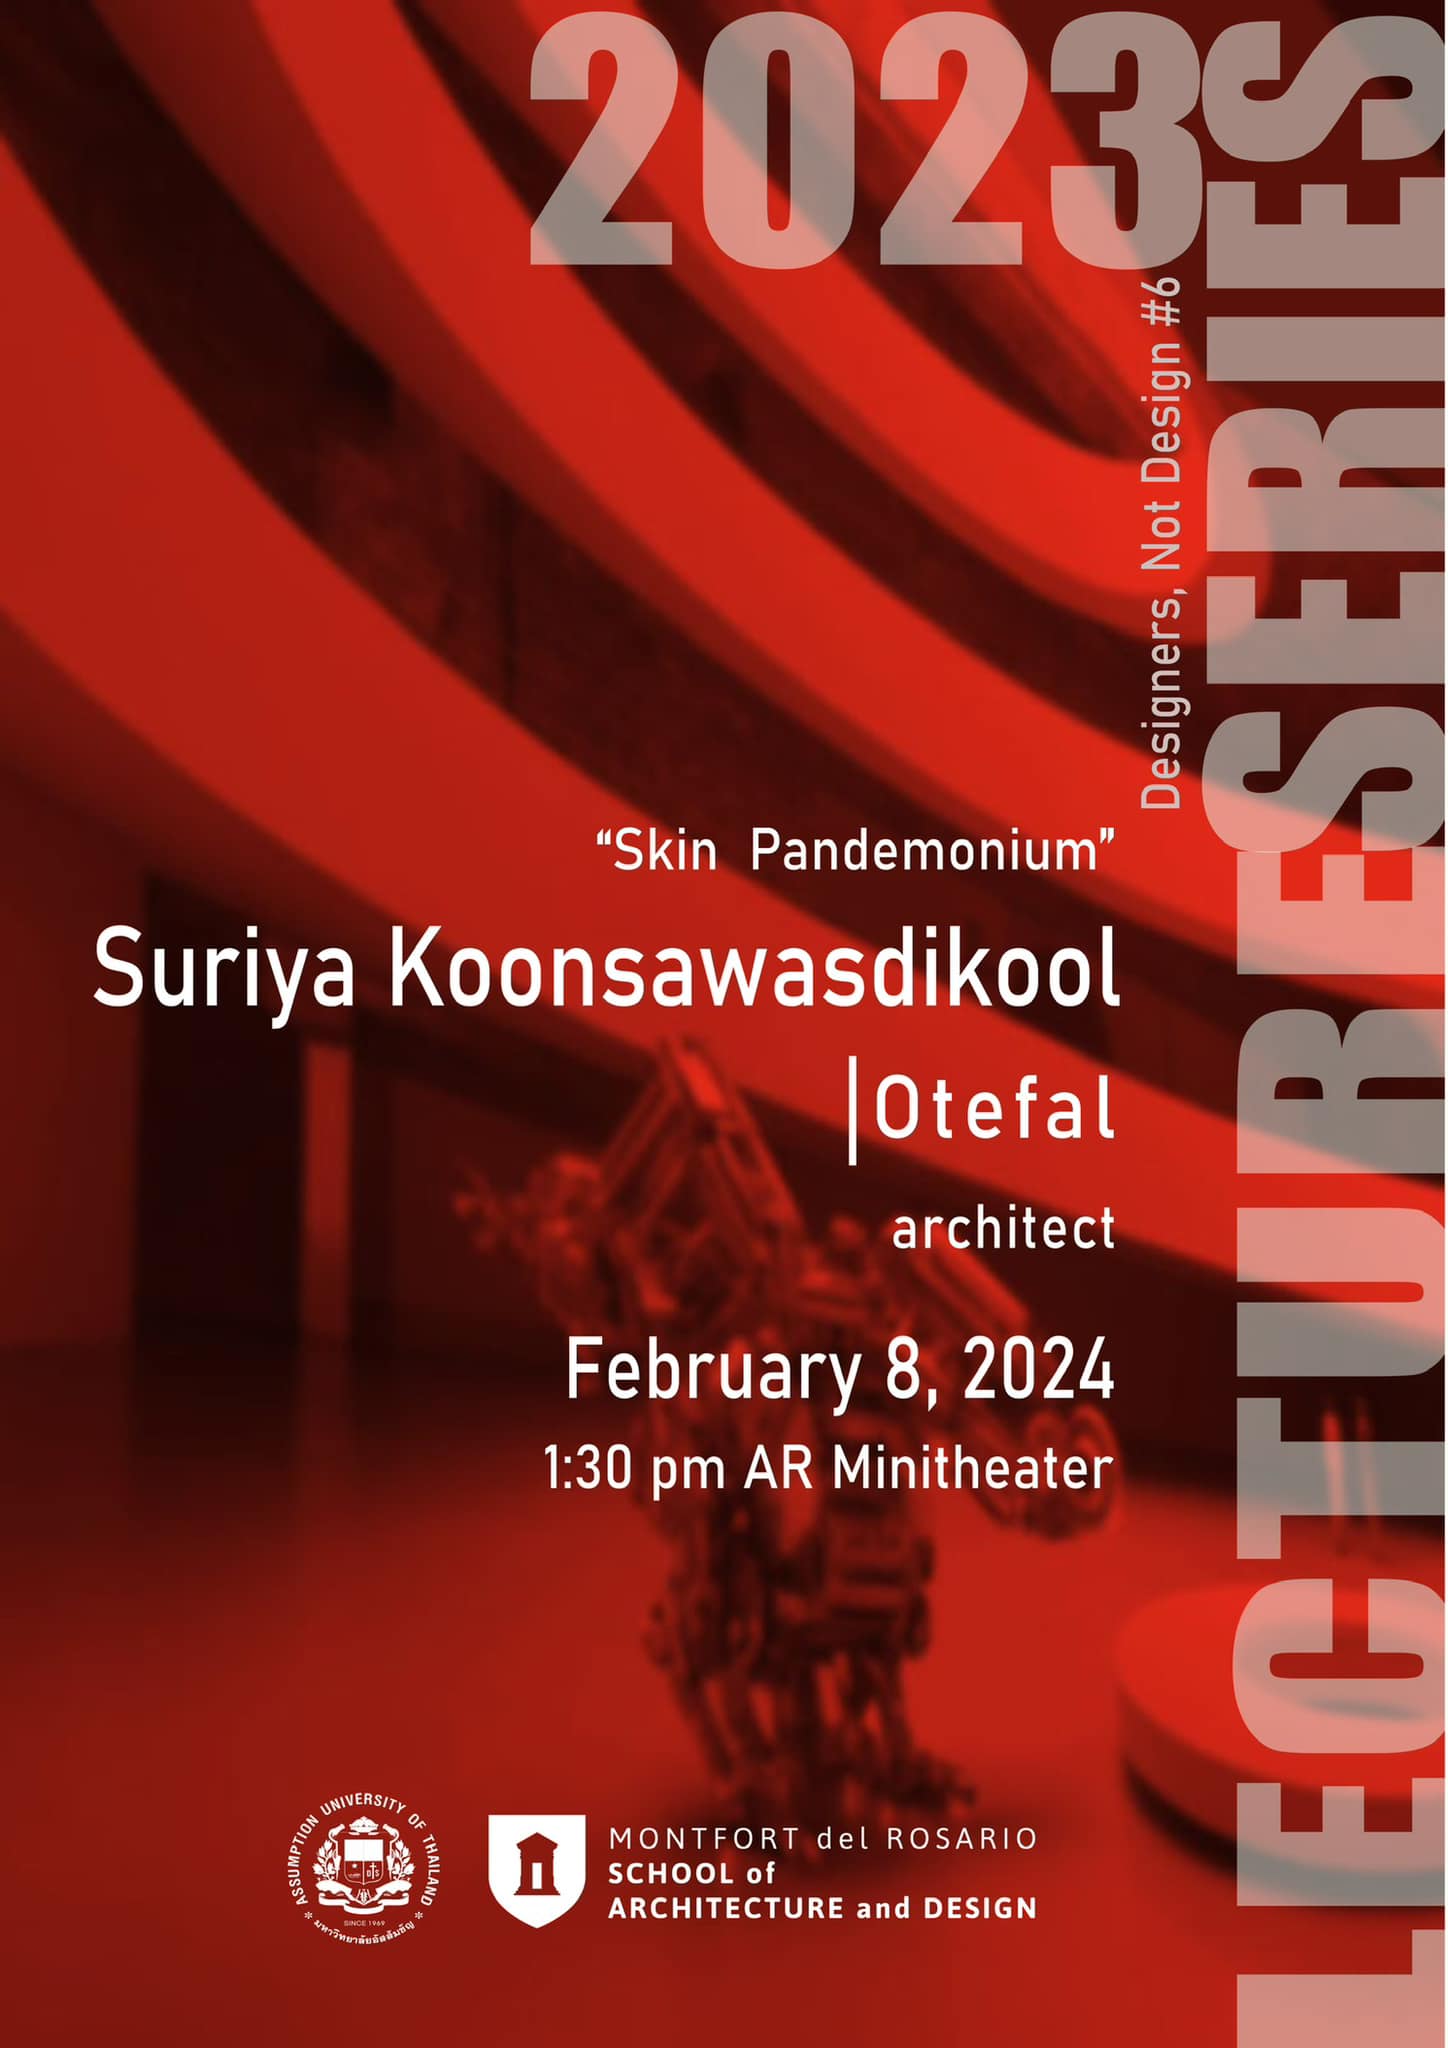 Lecture Series #6 “Skin Pandemonium” with Suriya Koonsawasdikool